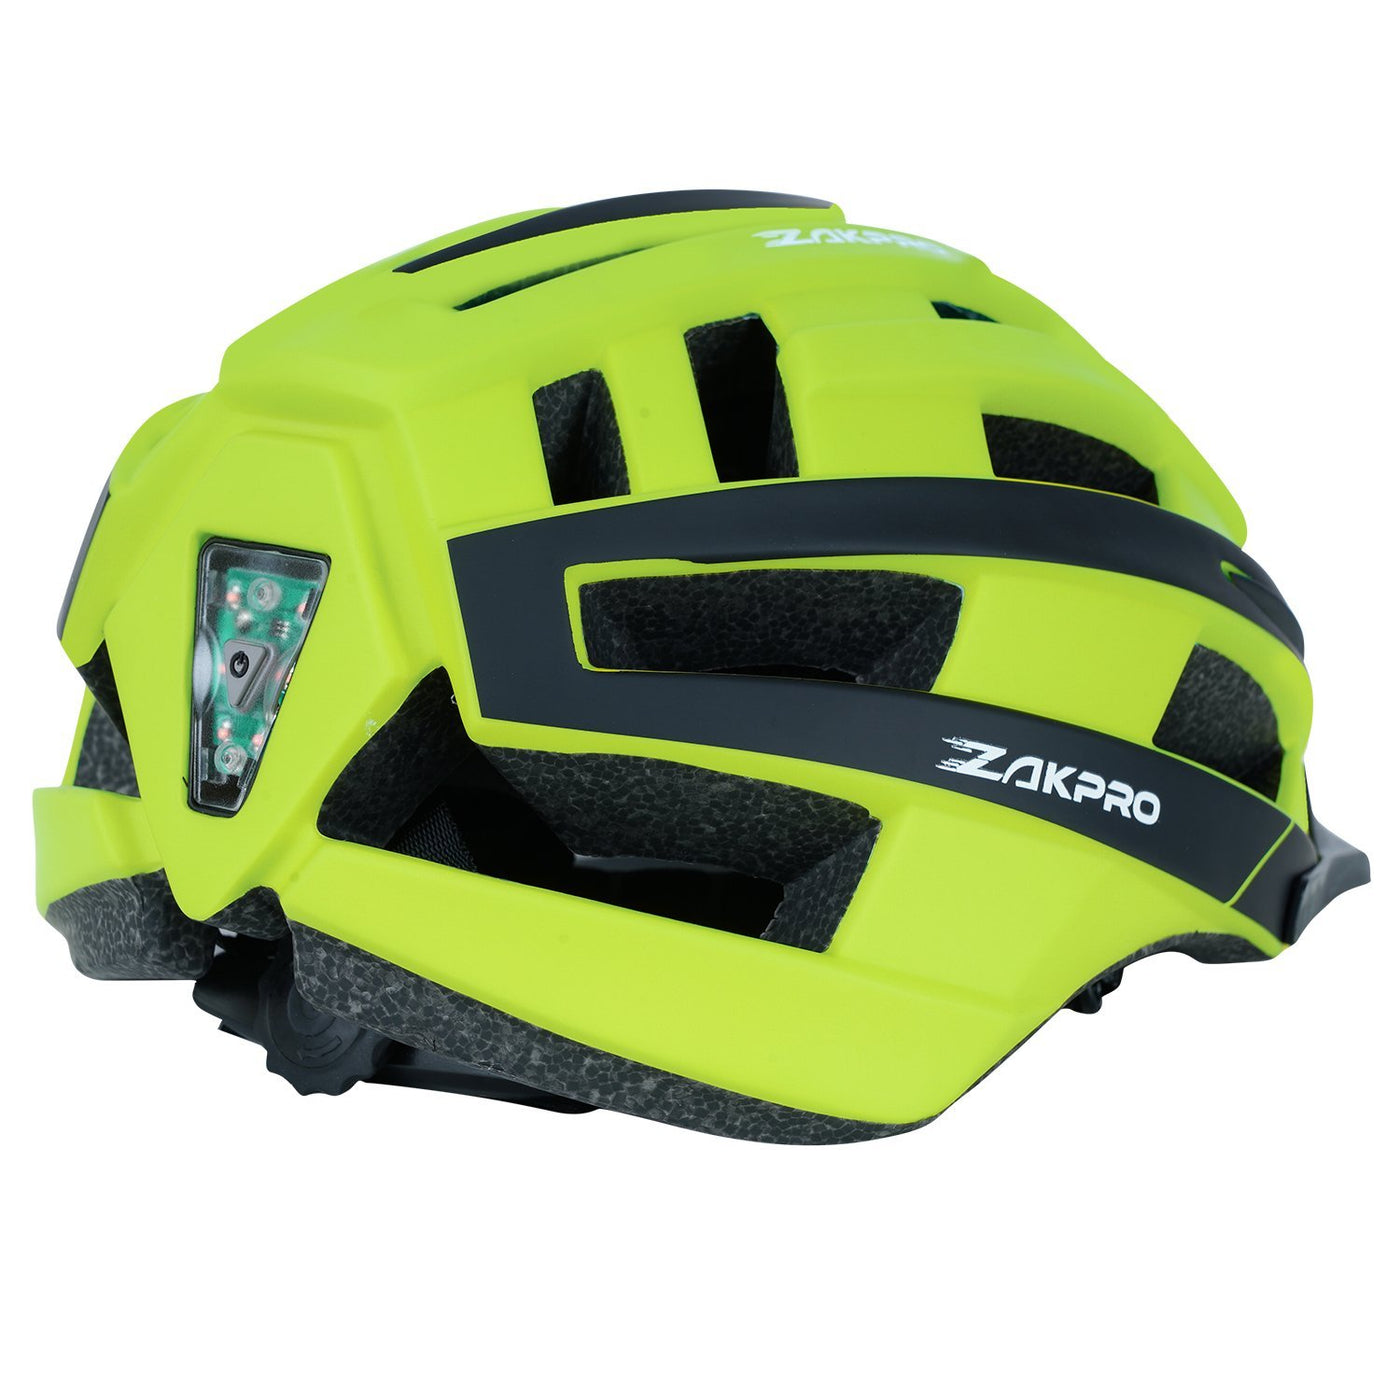 Zakpro Uphill MTB Cycling Helmet (Fluorescent Green)